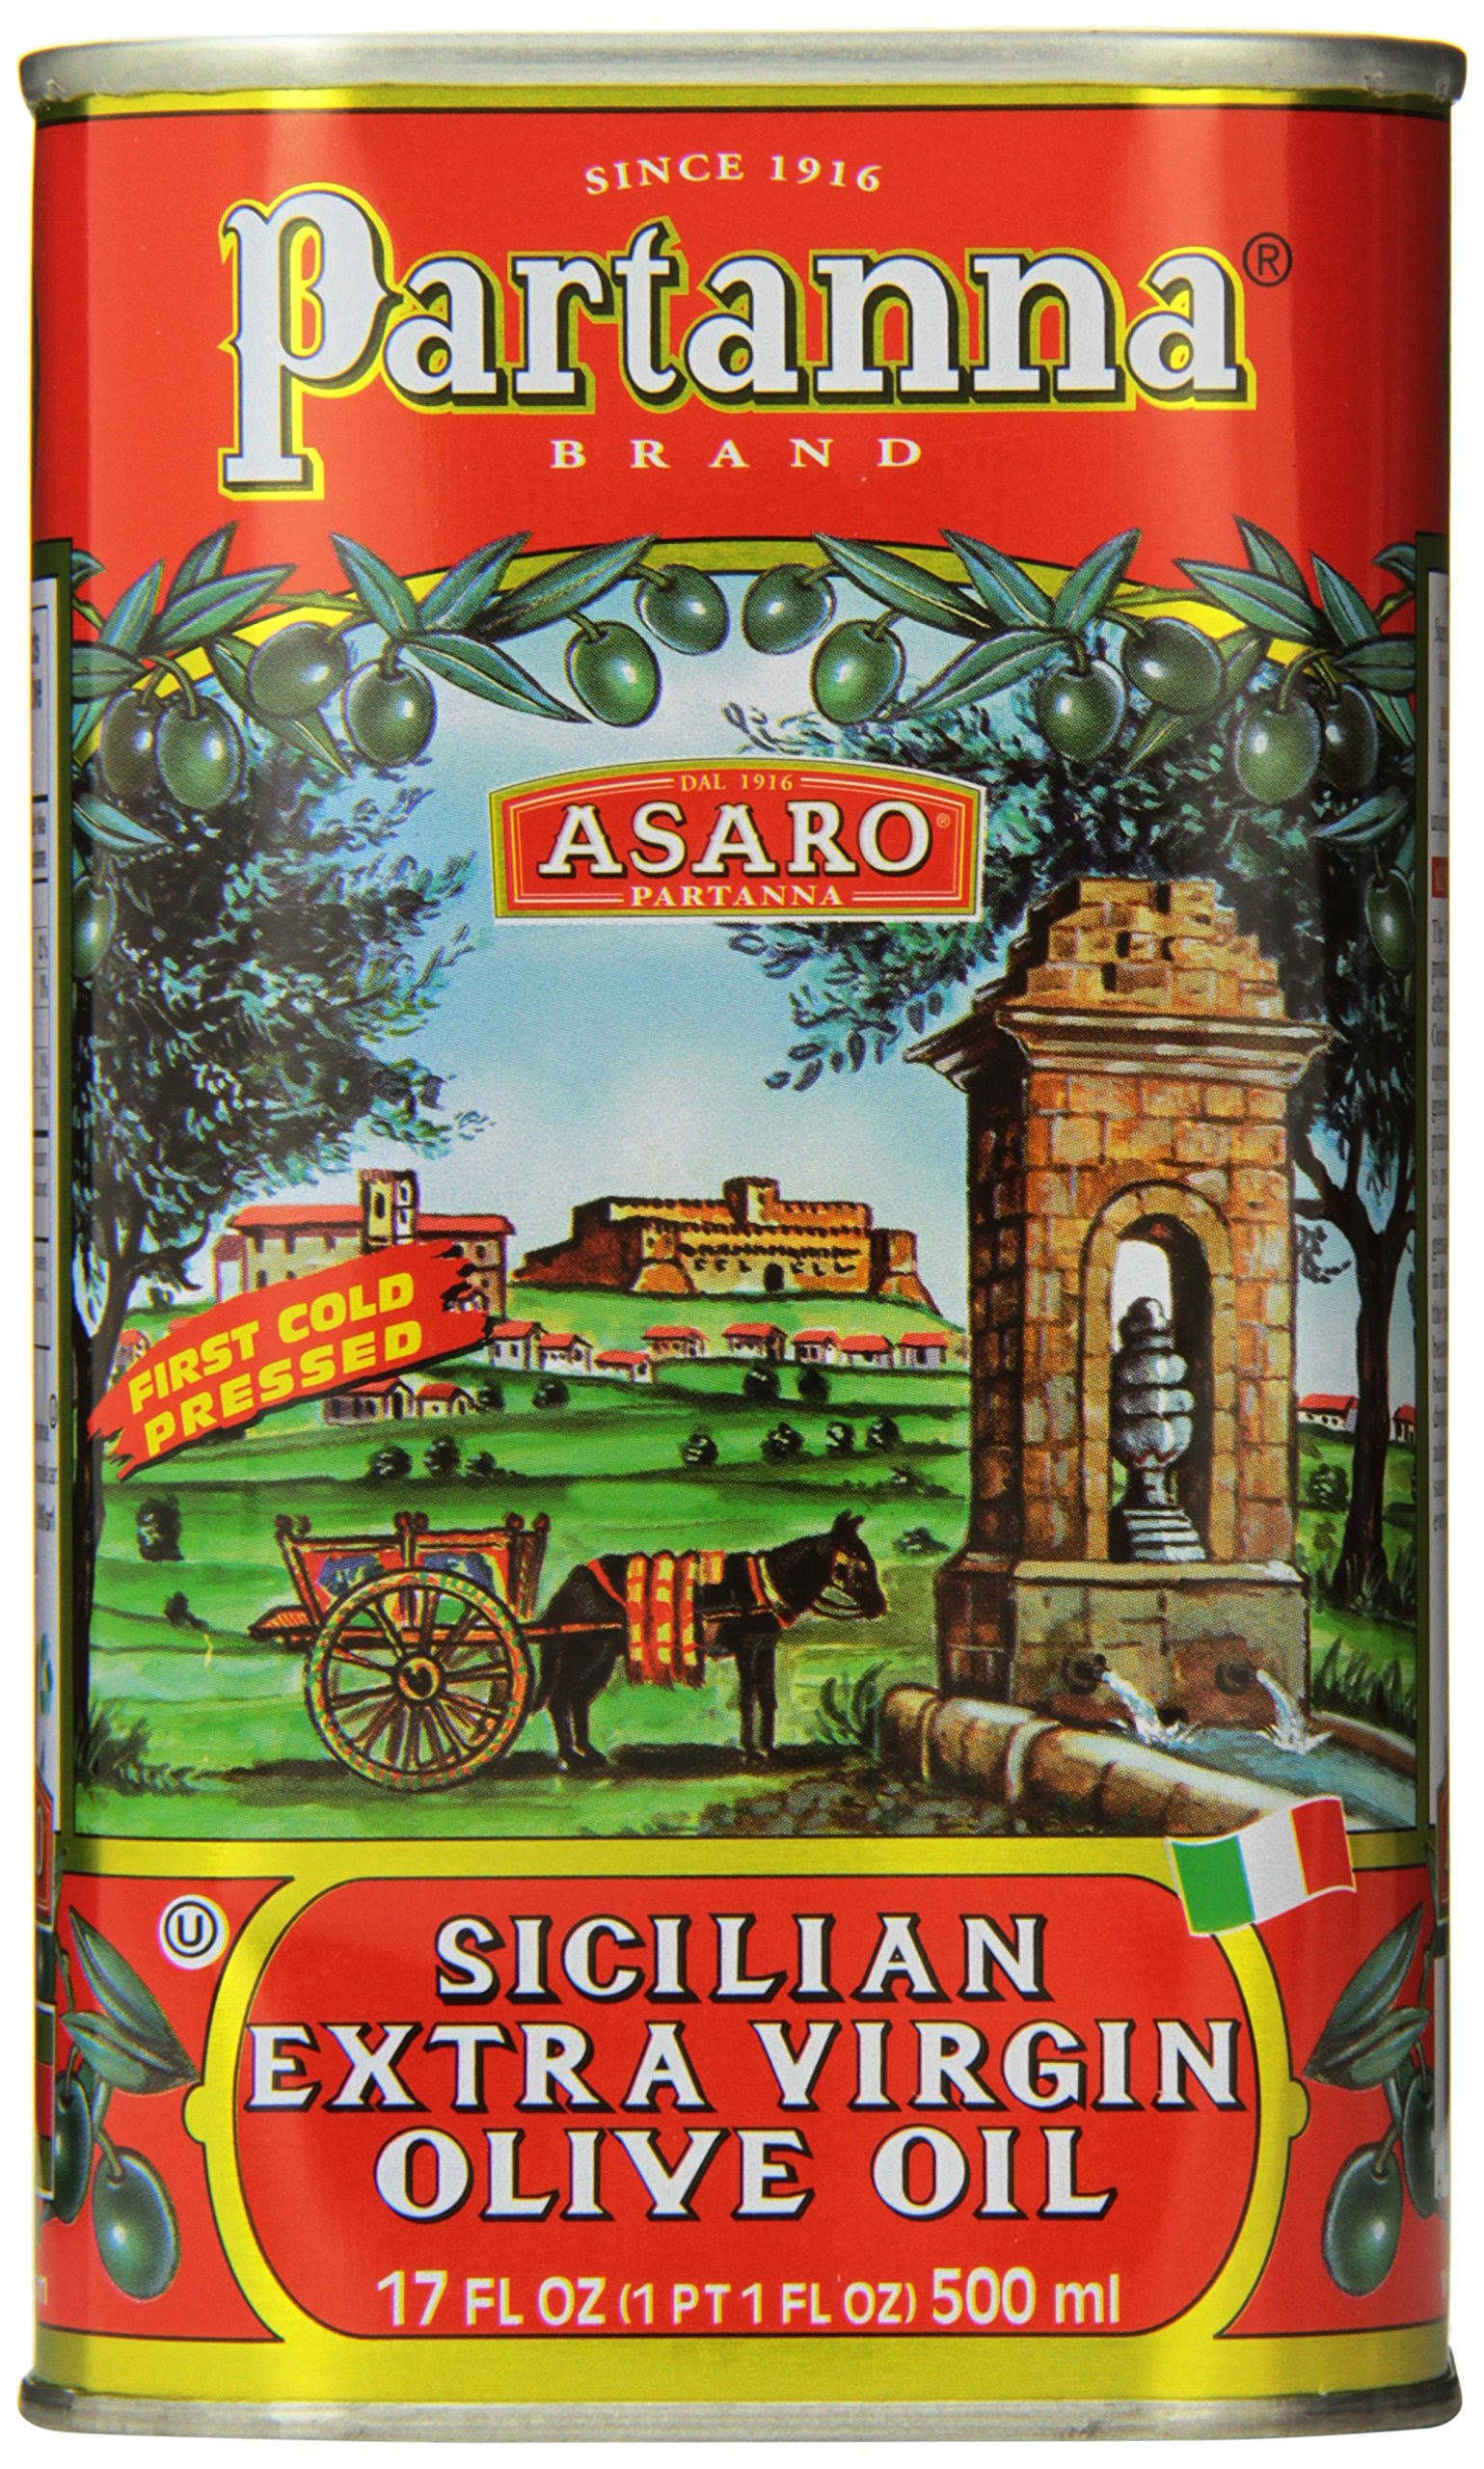 Partanna Sicilian Extra Virgin Olive Oil - 17oz